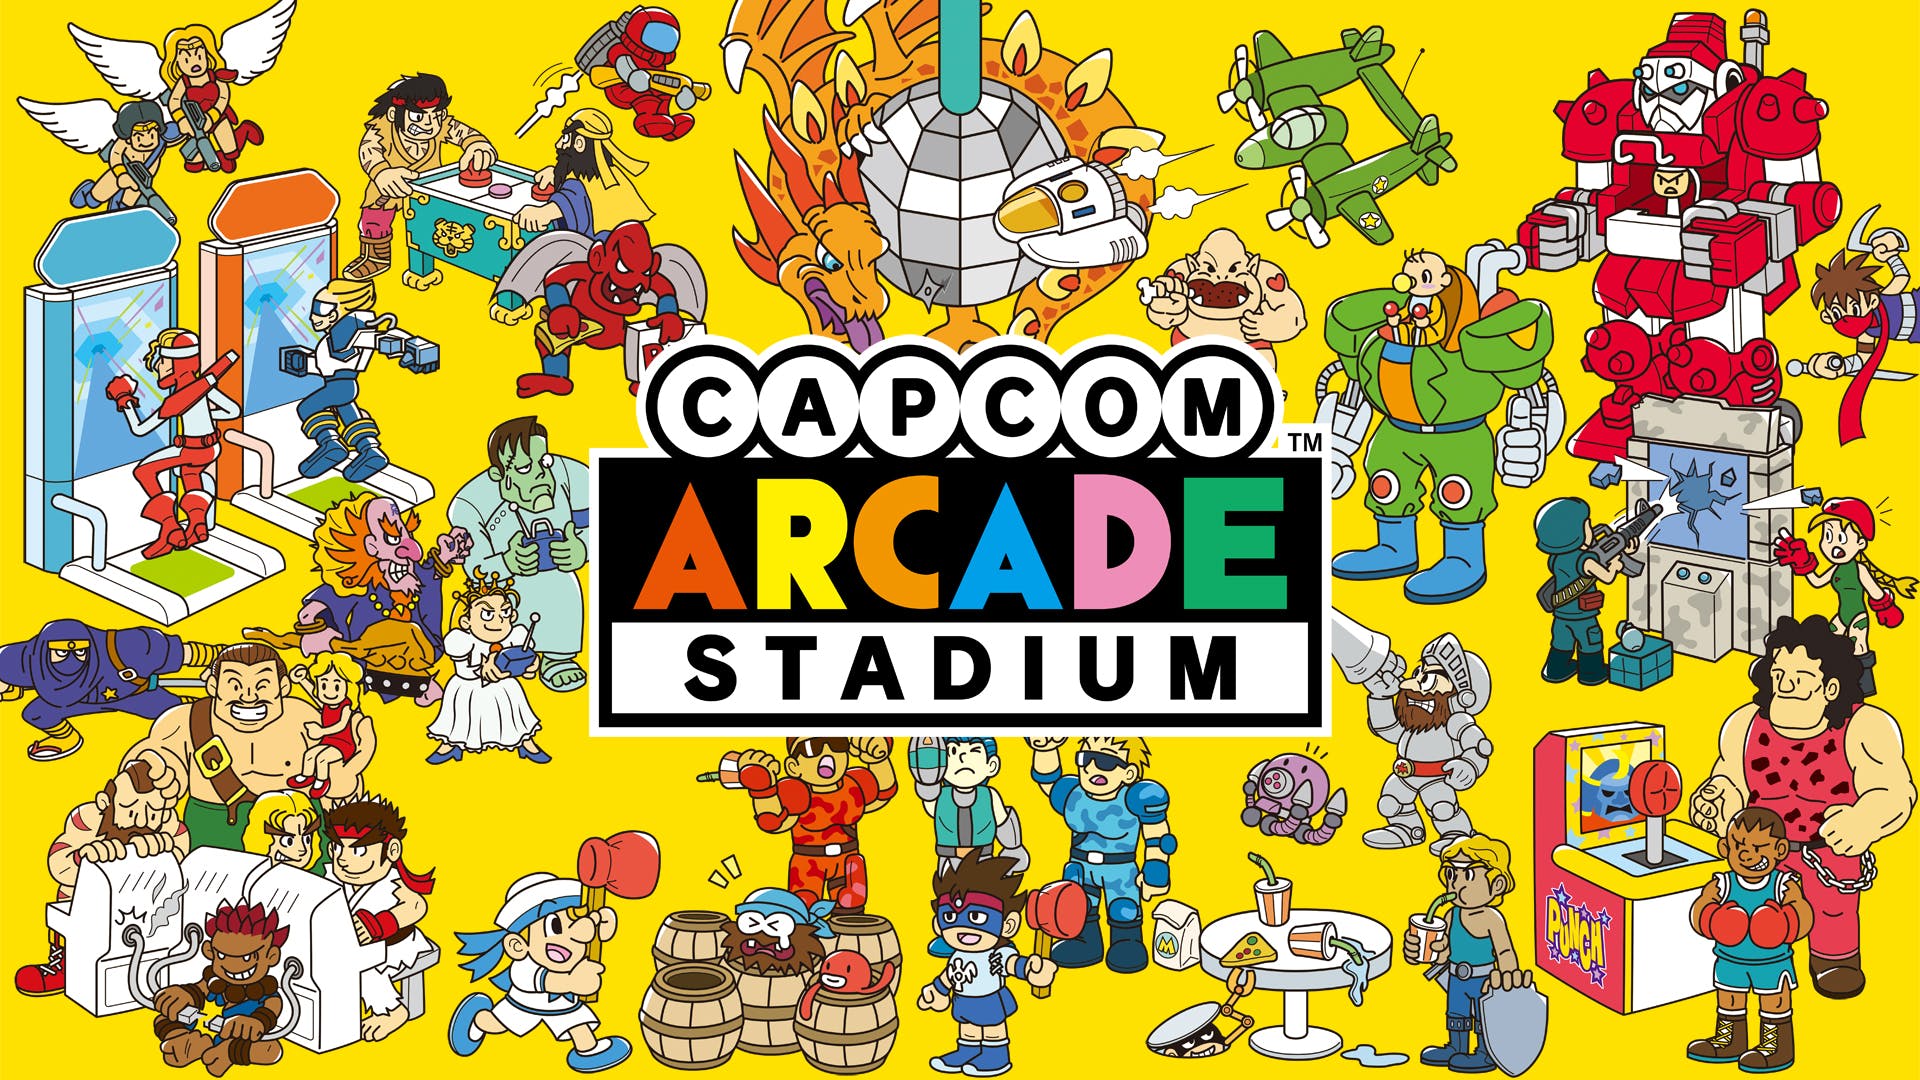 Capcom Arcade Stadium Releases .thenerdstash.com